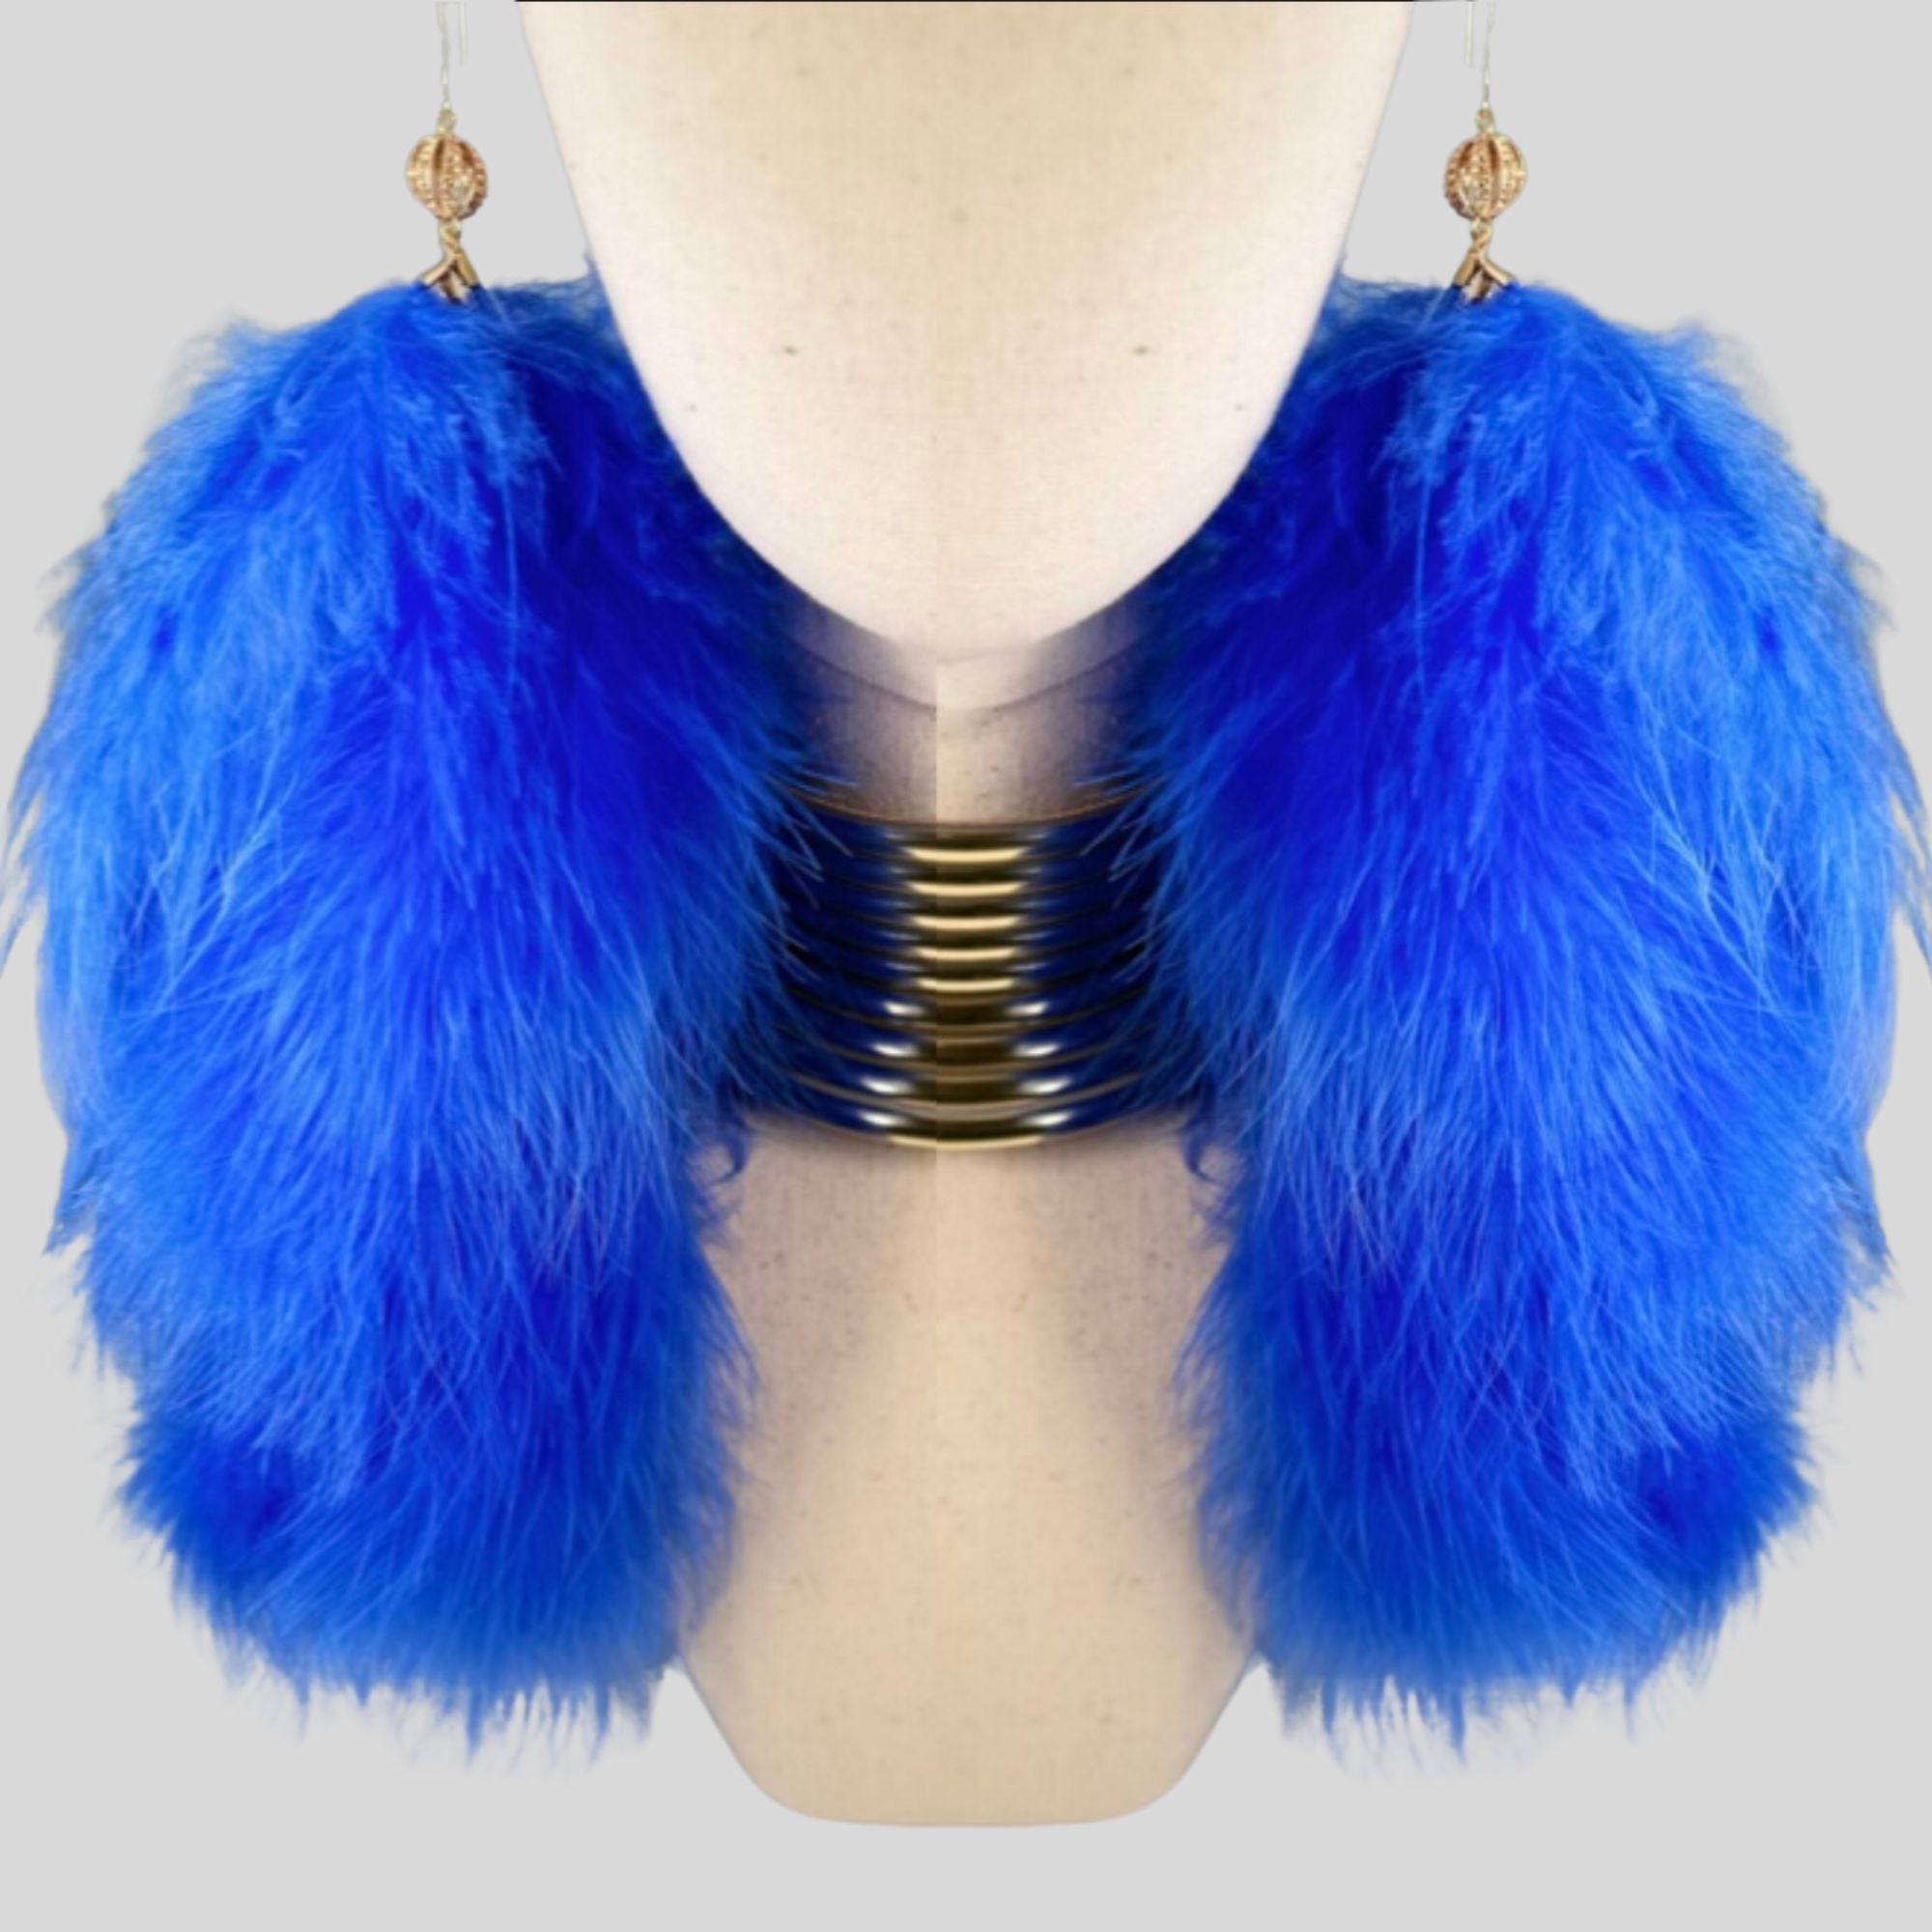 Royal Blue Plumes Fluffy Marabou Down Long Dangle Feather Earrings